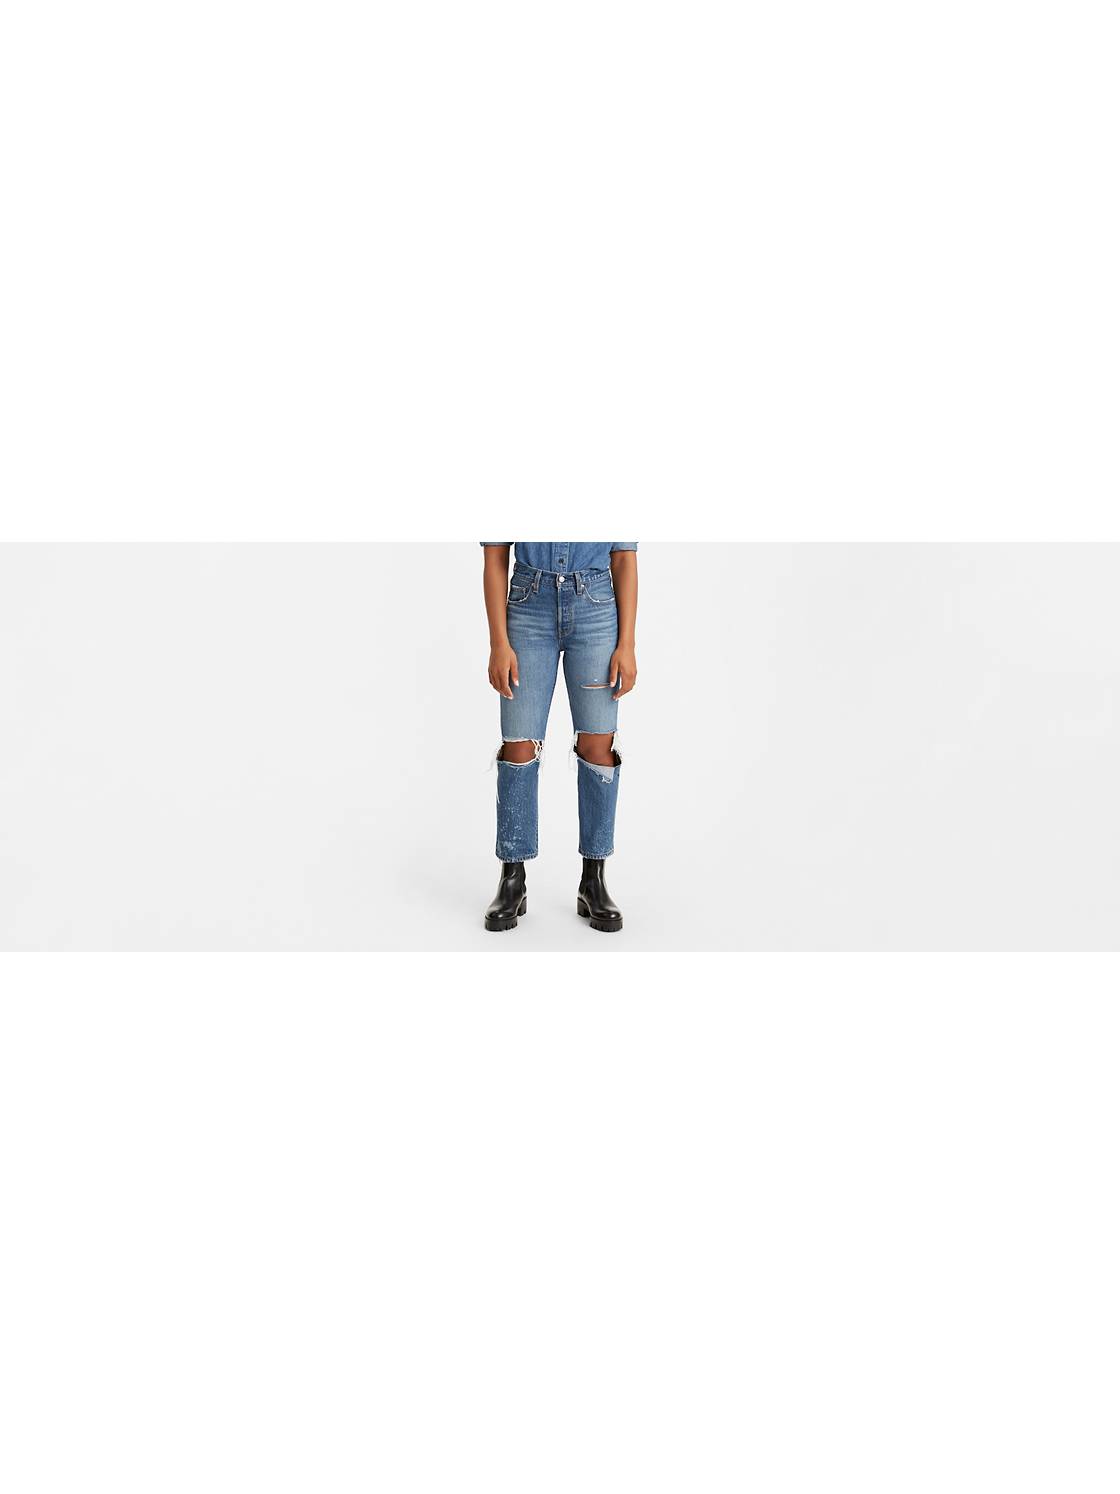 Jeans Women - The Original Button Fly | Levi's® US